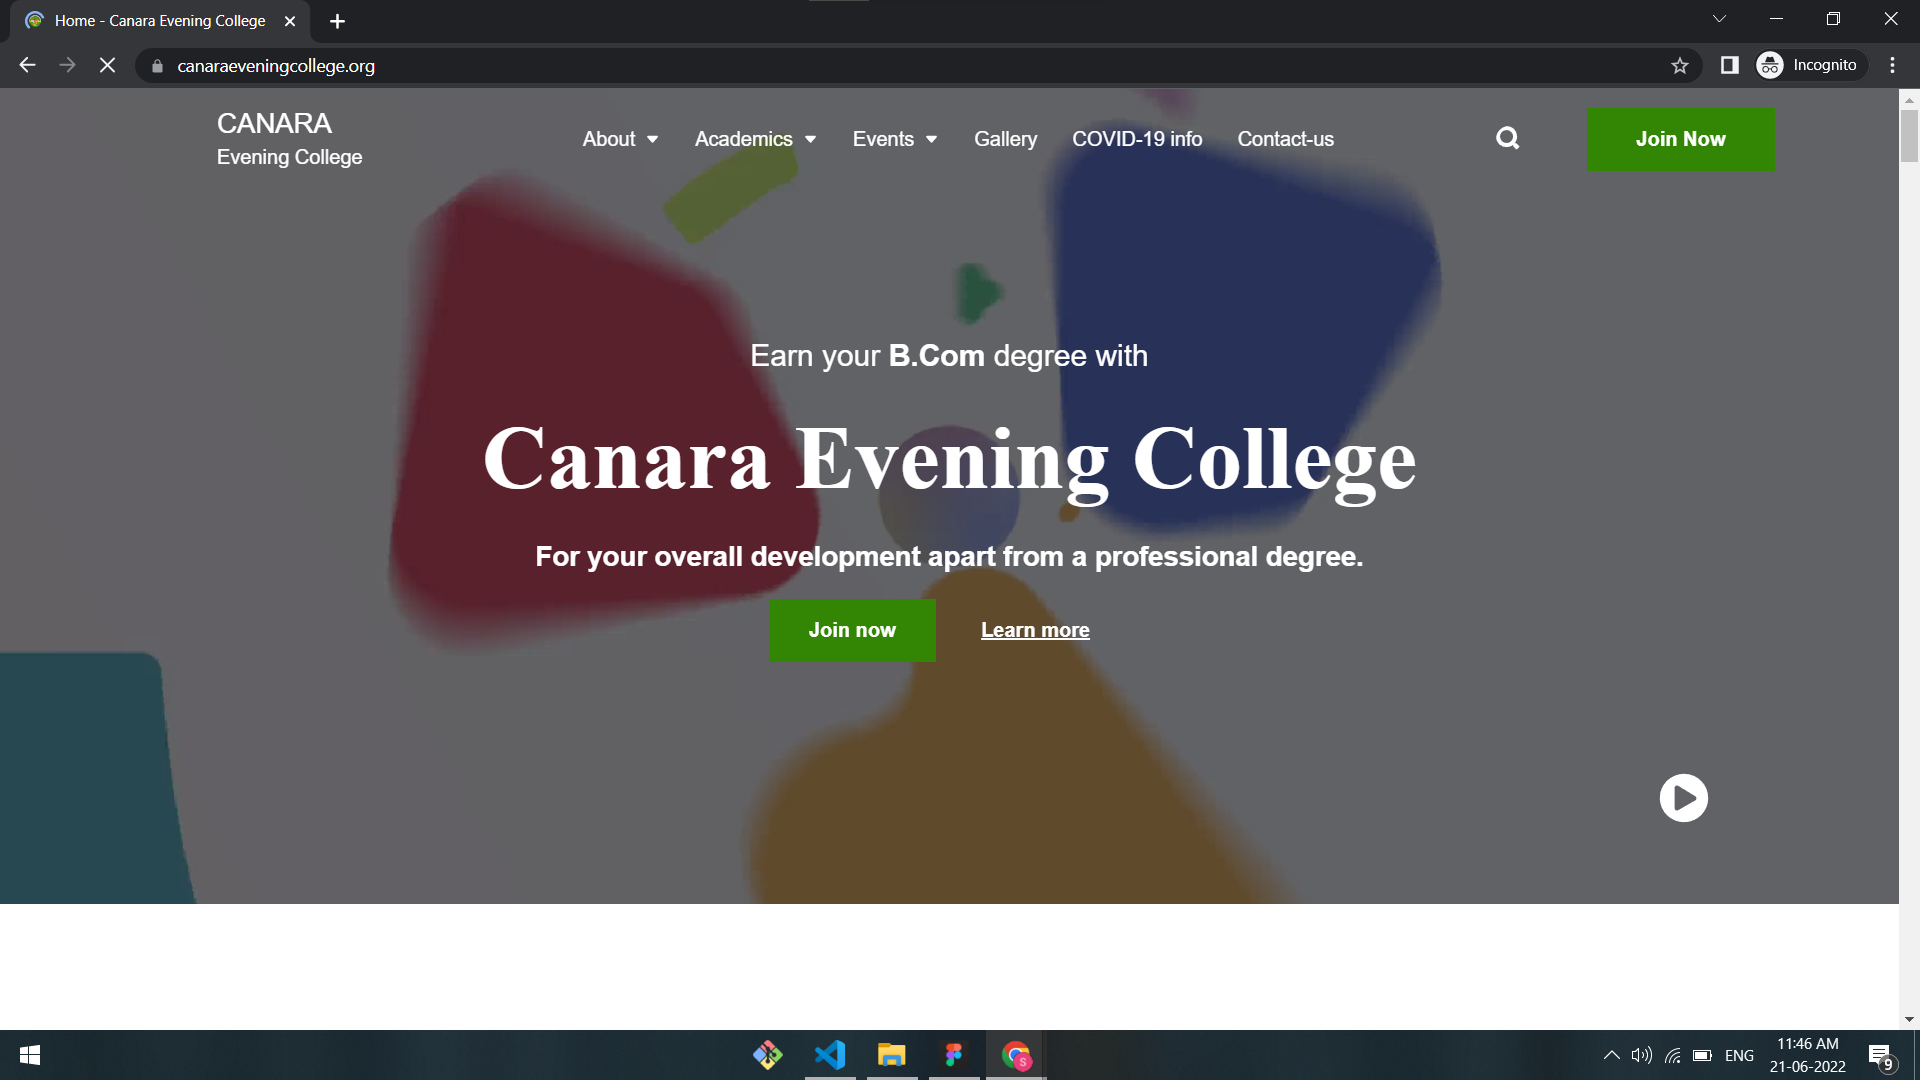 Canara Evening College image